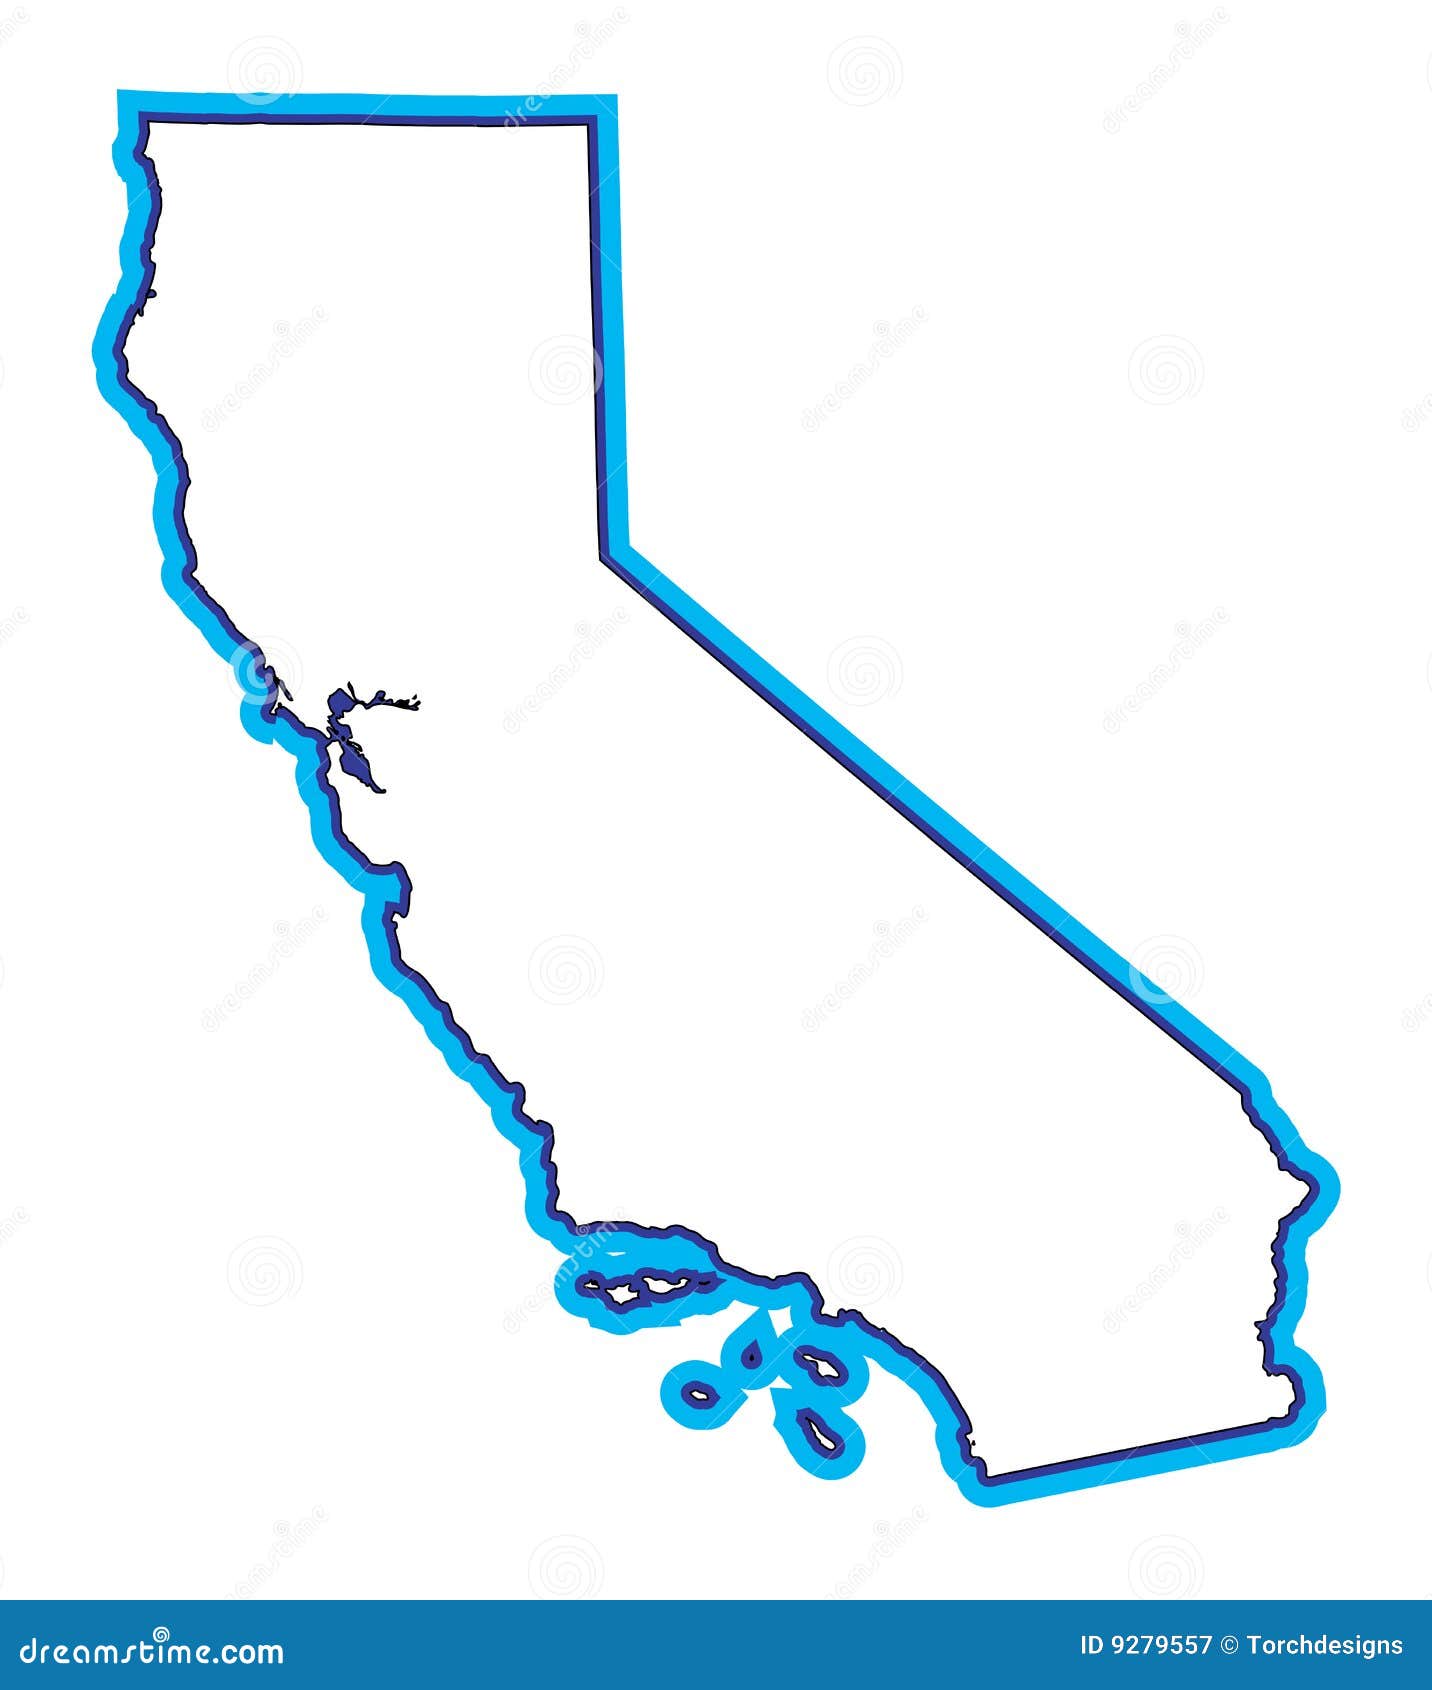 clip art california map - photo #14